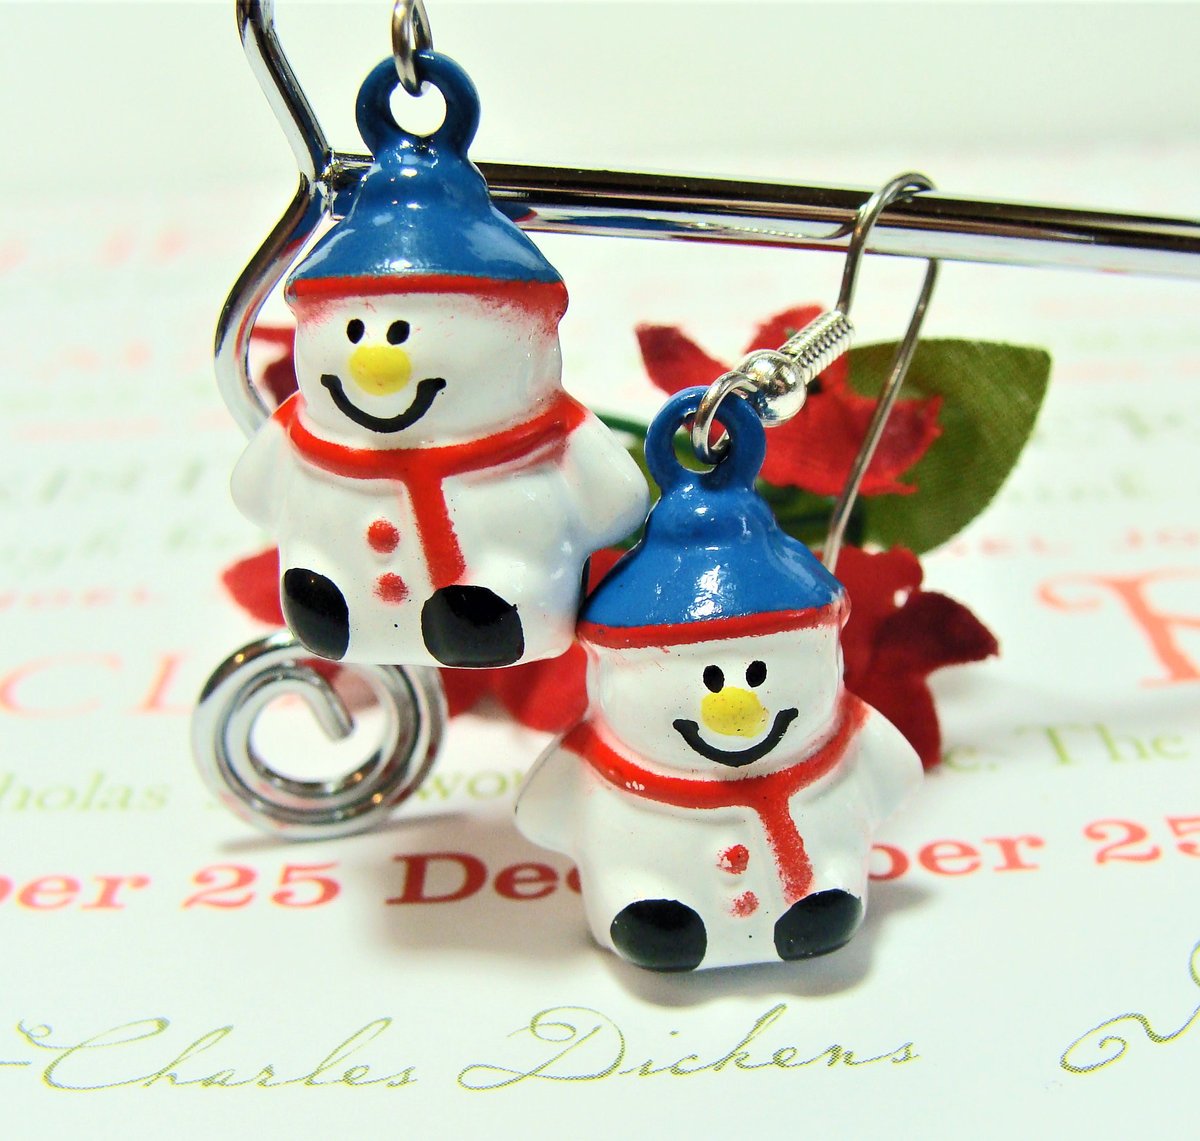 So Cute Snowman Jingle Bell Earrings: etsy.com/listing/648186… #snowmanearrings #jinglebellearrings #winterjewelry #jinglebells #lightweight #Christmasearrings #secretsantagift #funtowear #holidayparites #jinglealltheway #giftsforher #etsyhandmadejewelry #etsyseller #shopsmallbiz